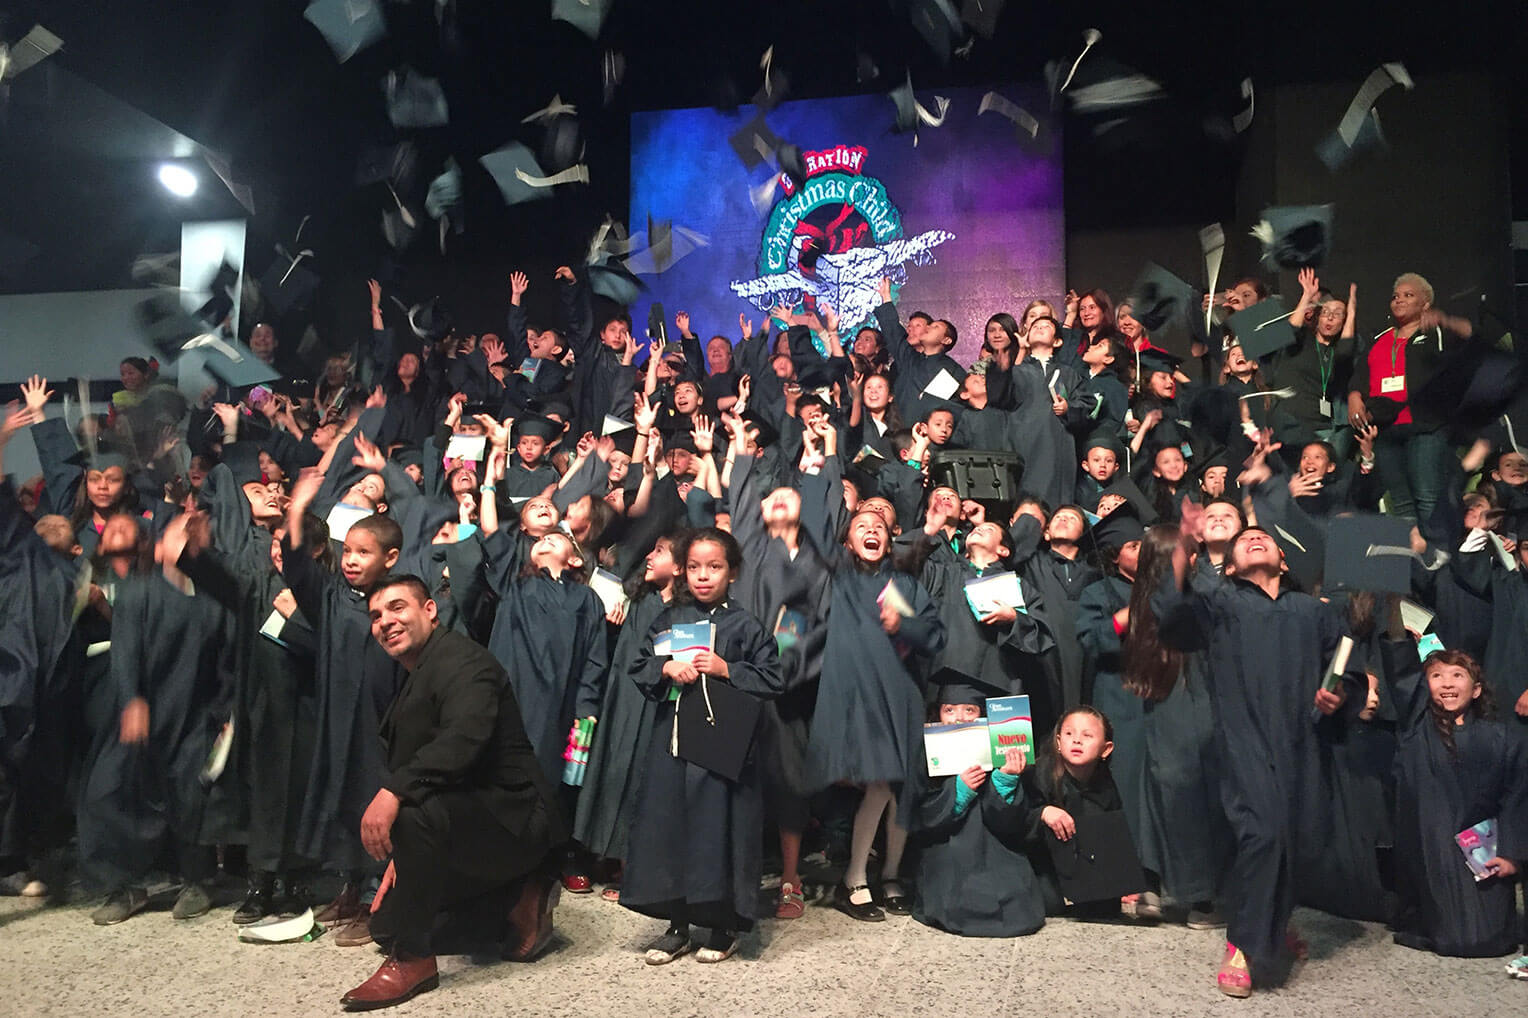 The Greatest Journey graduates